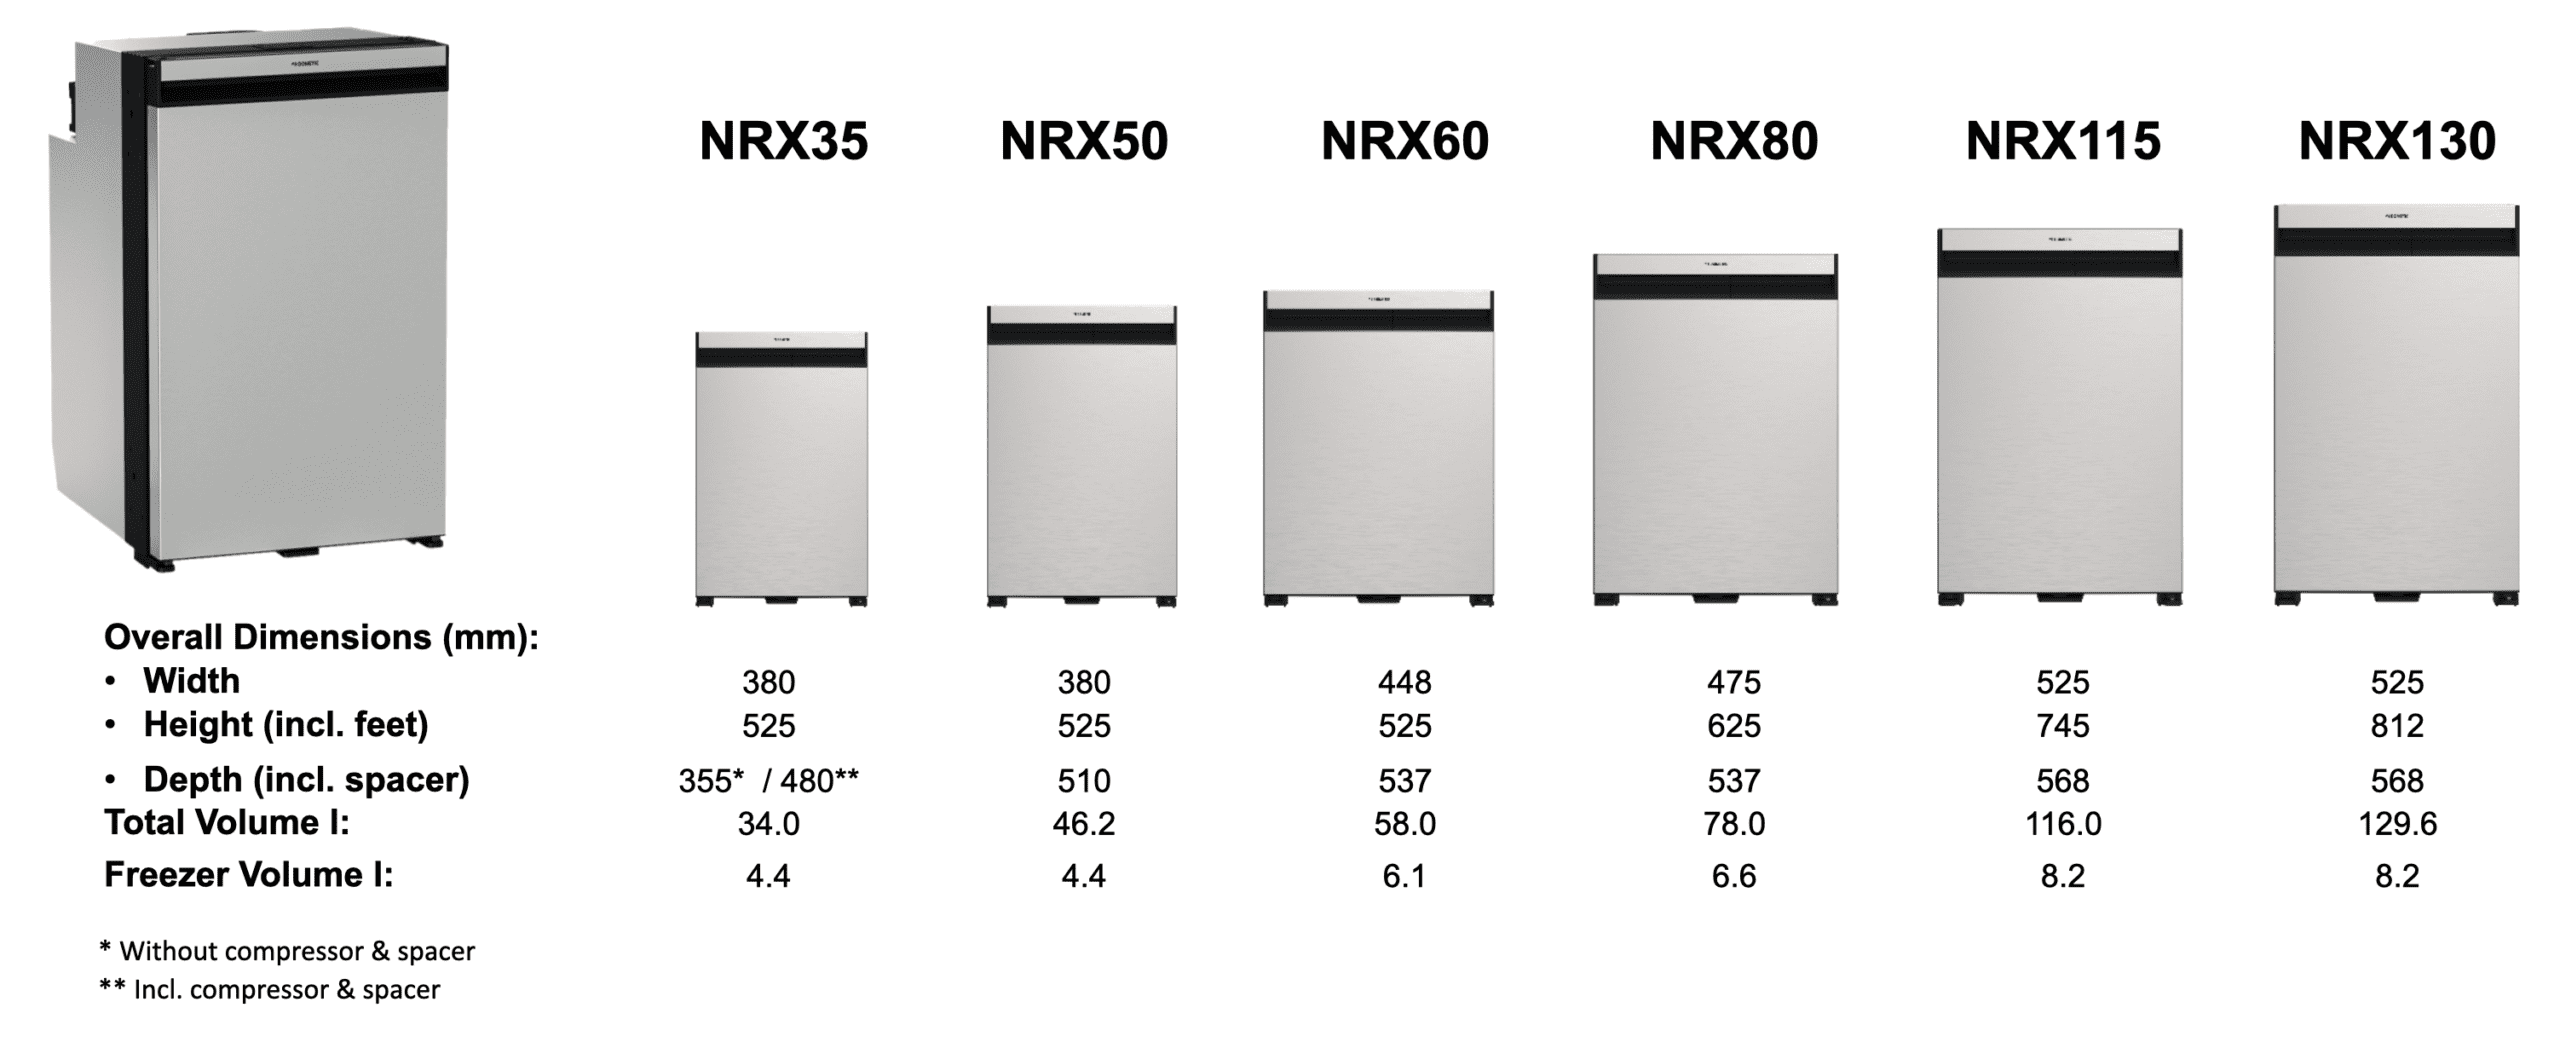 Dometic Nrx Series Refrigerator Dimensions